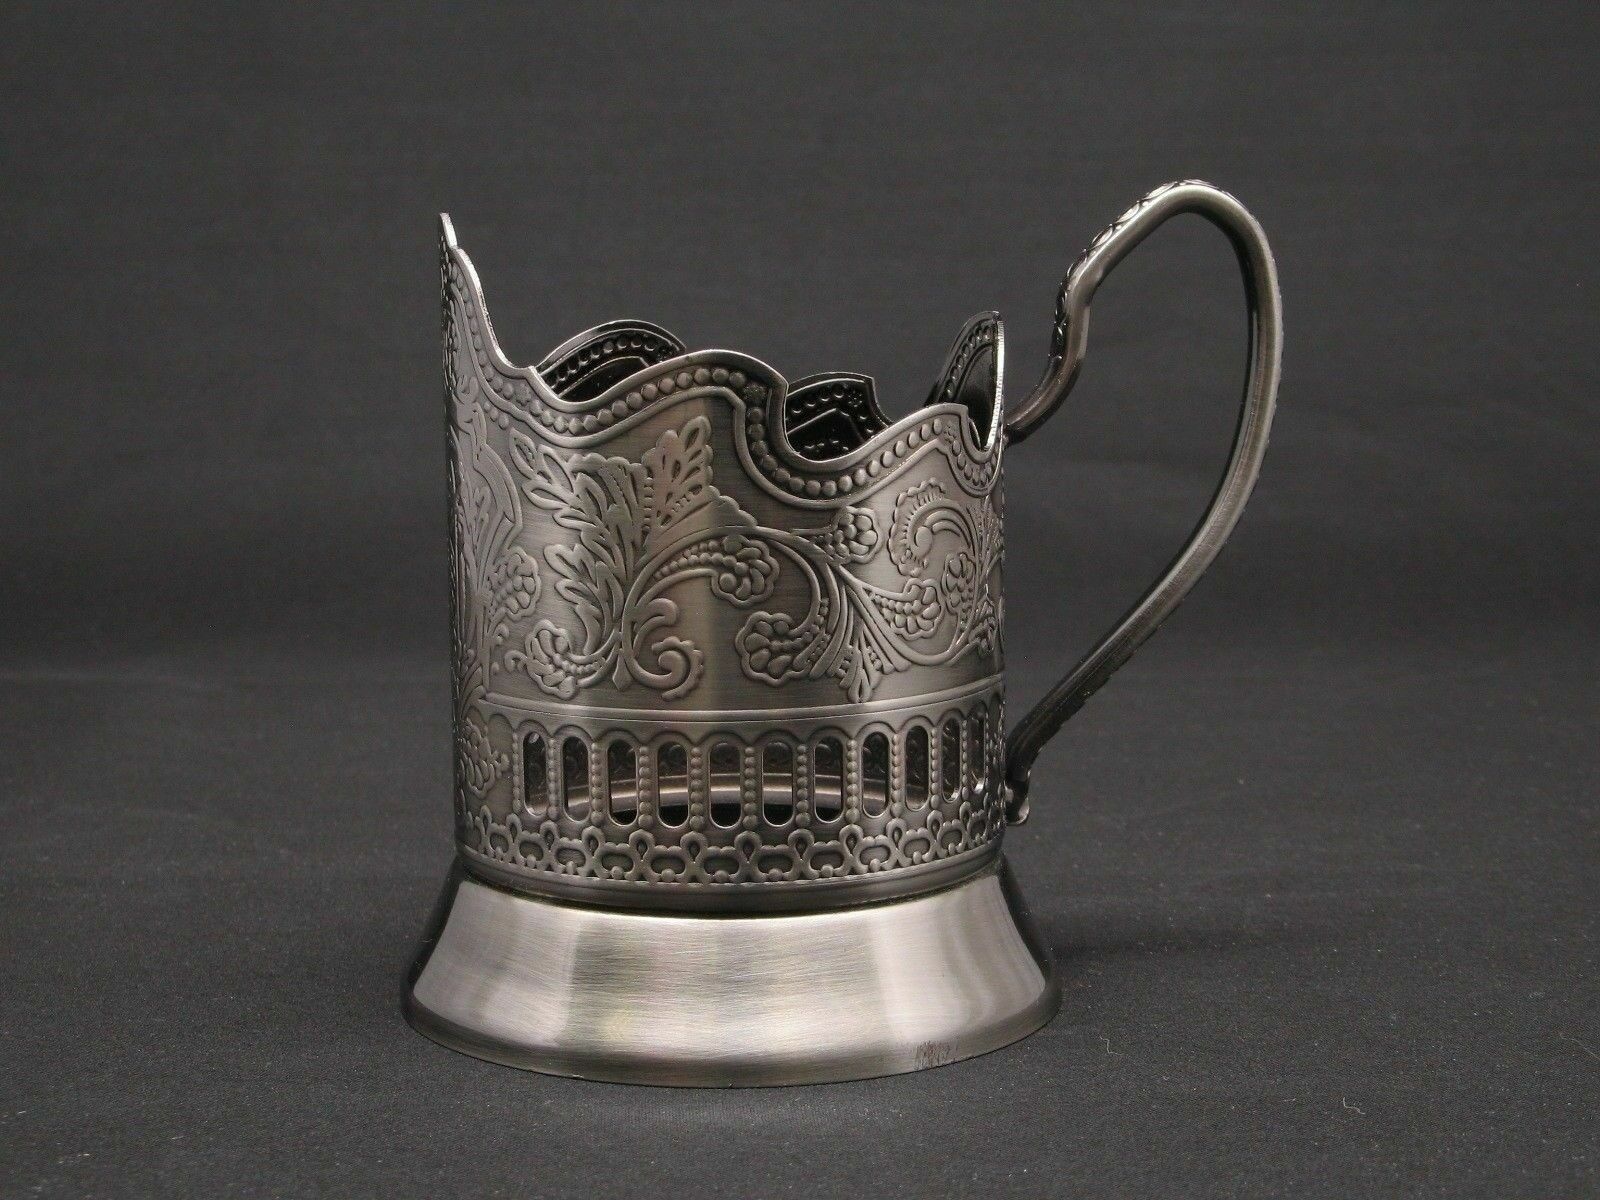 Russian Tea Glass Holder Podstakannik - Soviet / USSR Stainless Steel Drink ware